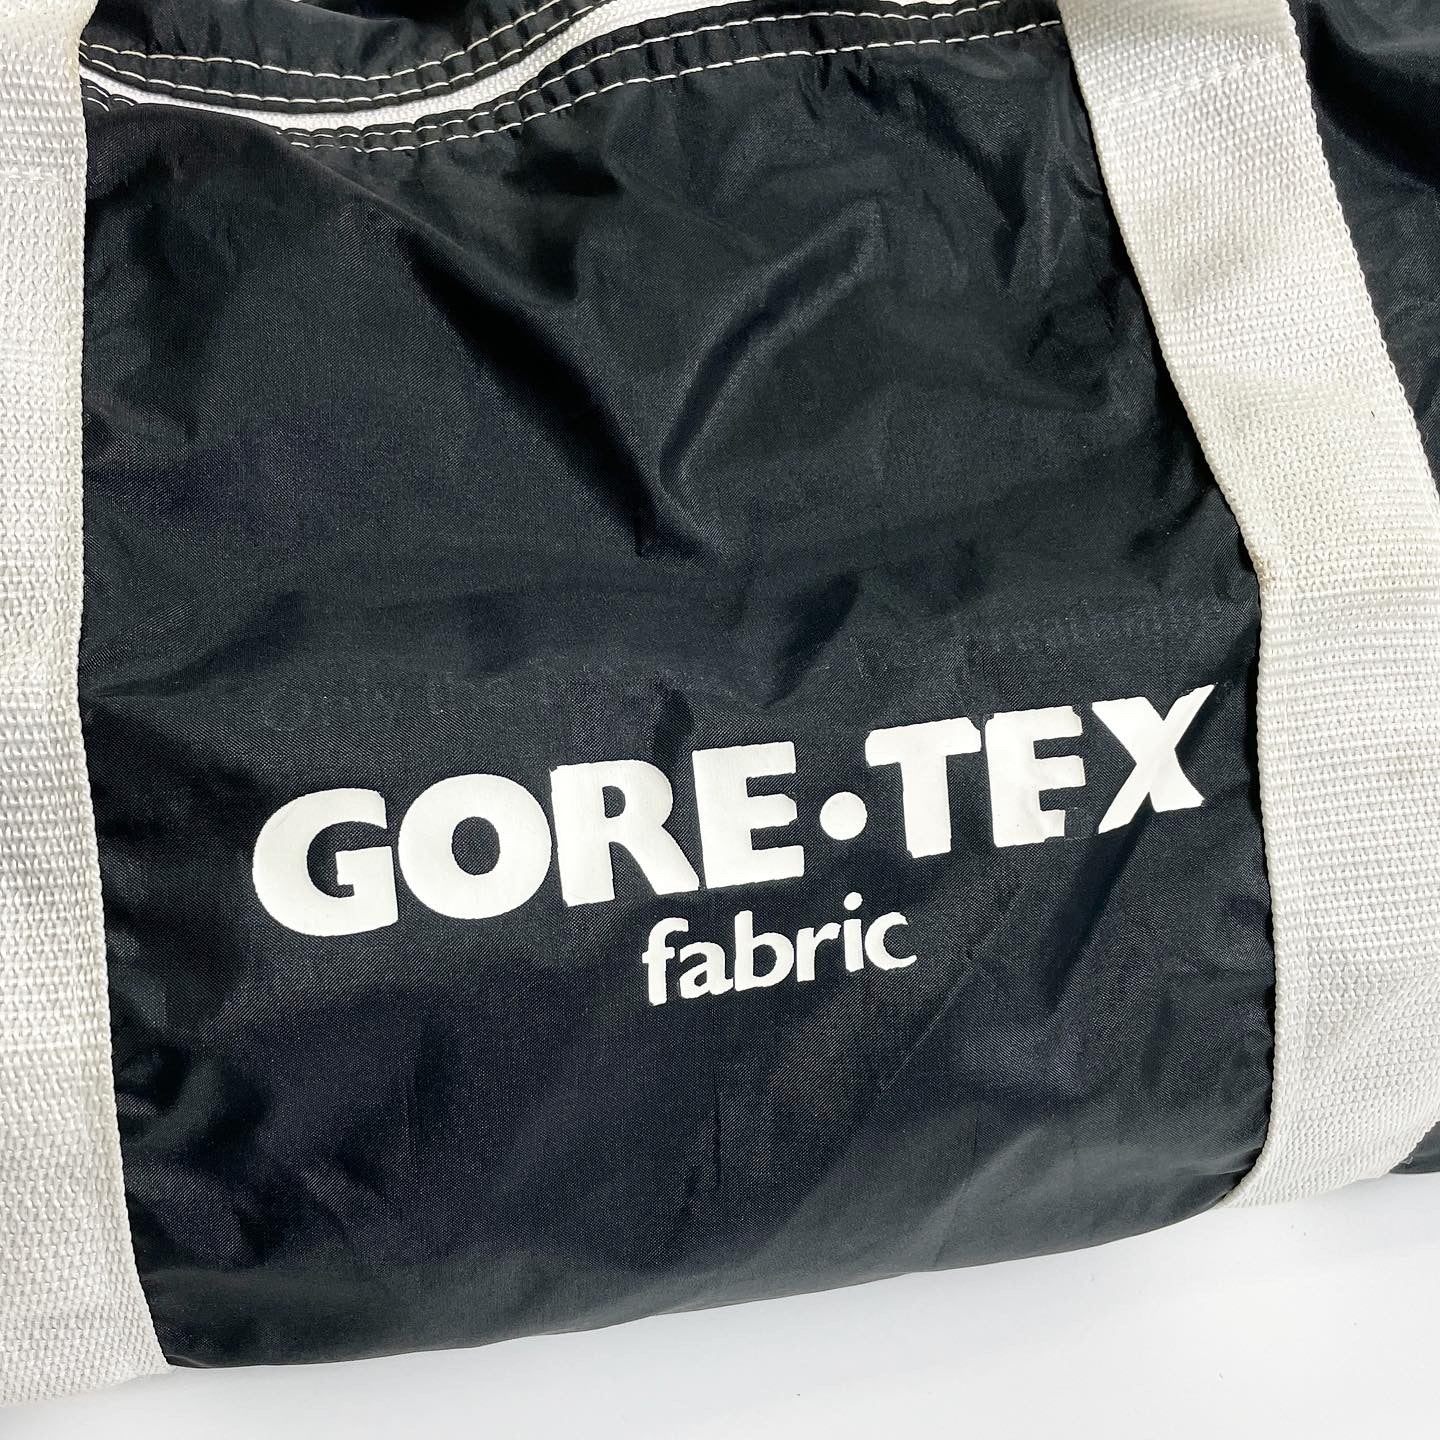 GORE-TEX fabric Vintage Duffle Small Bag